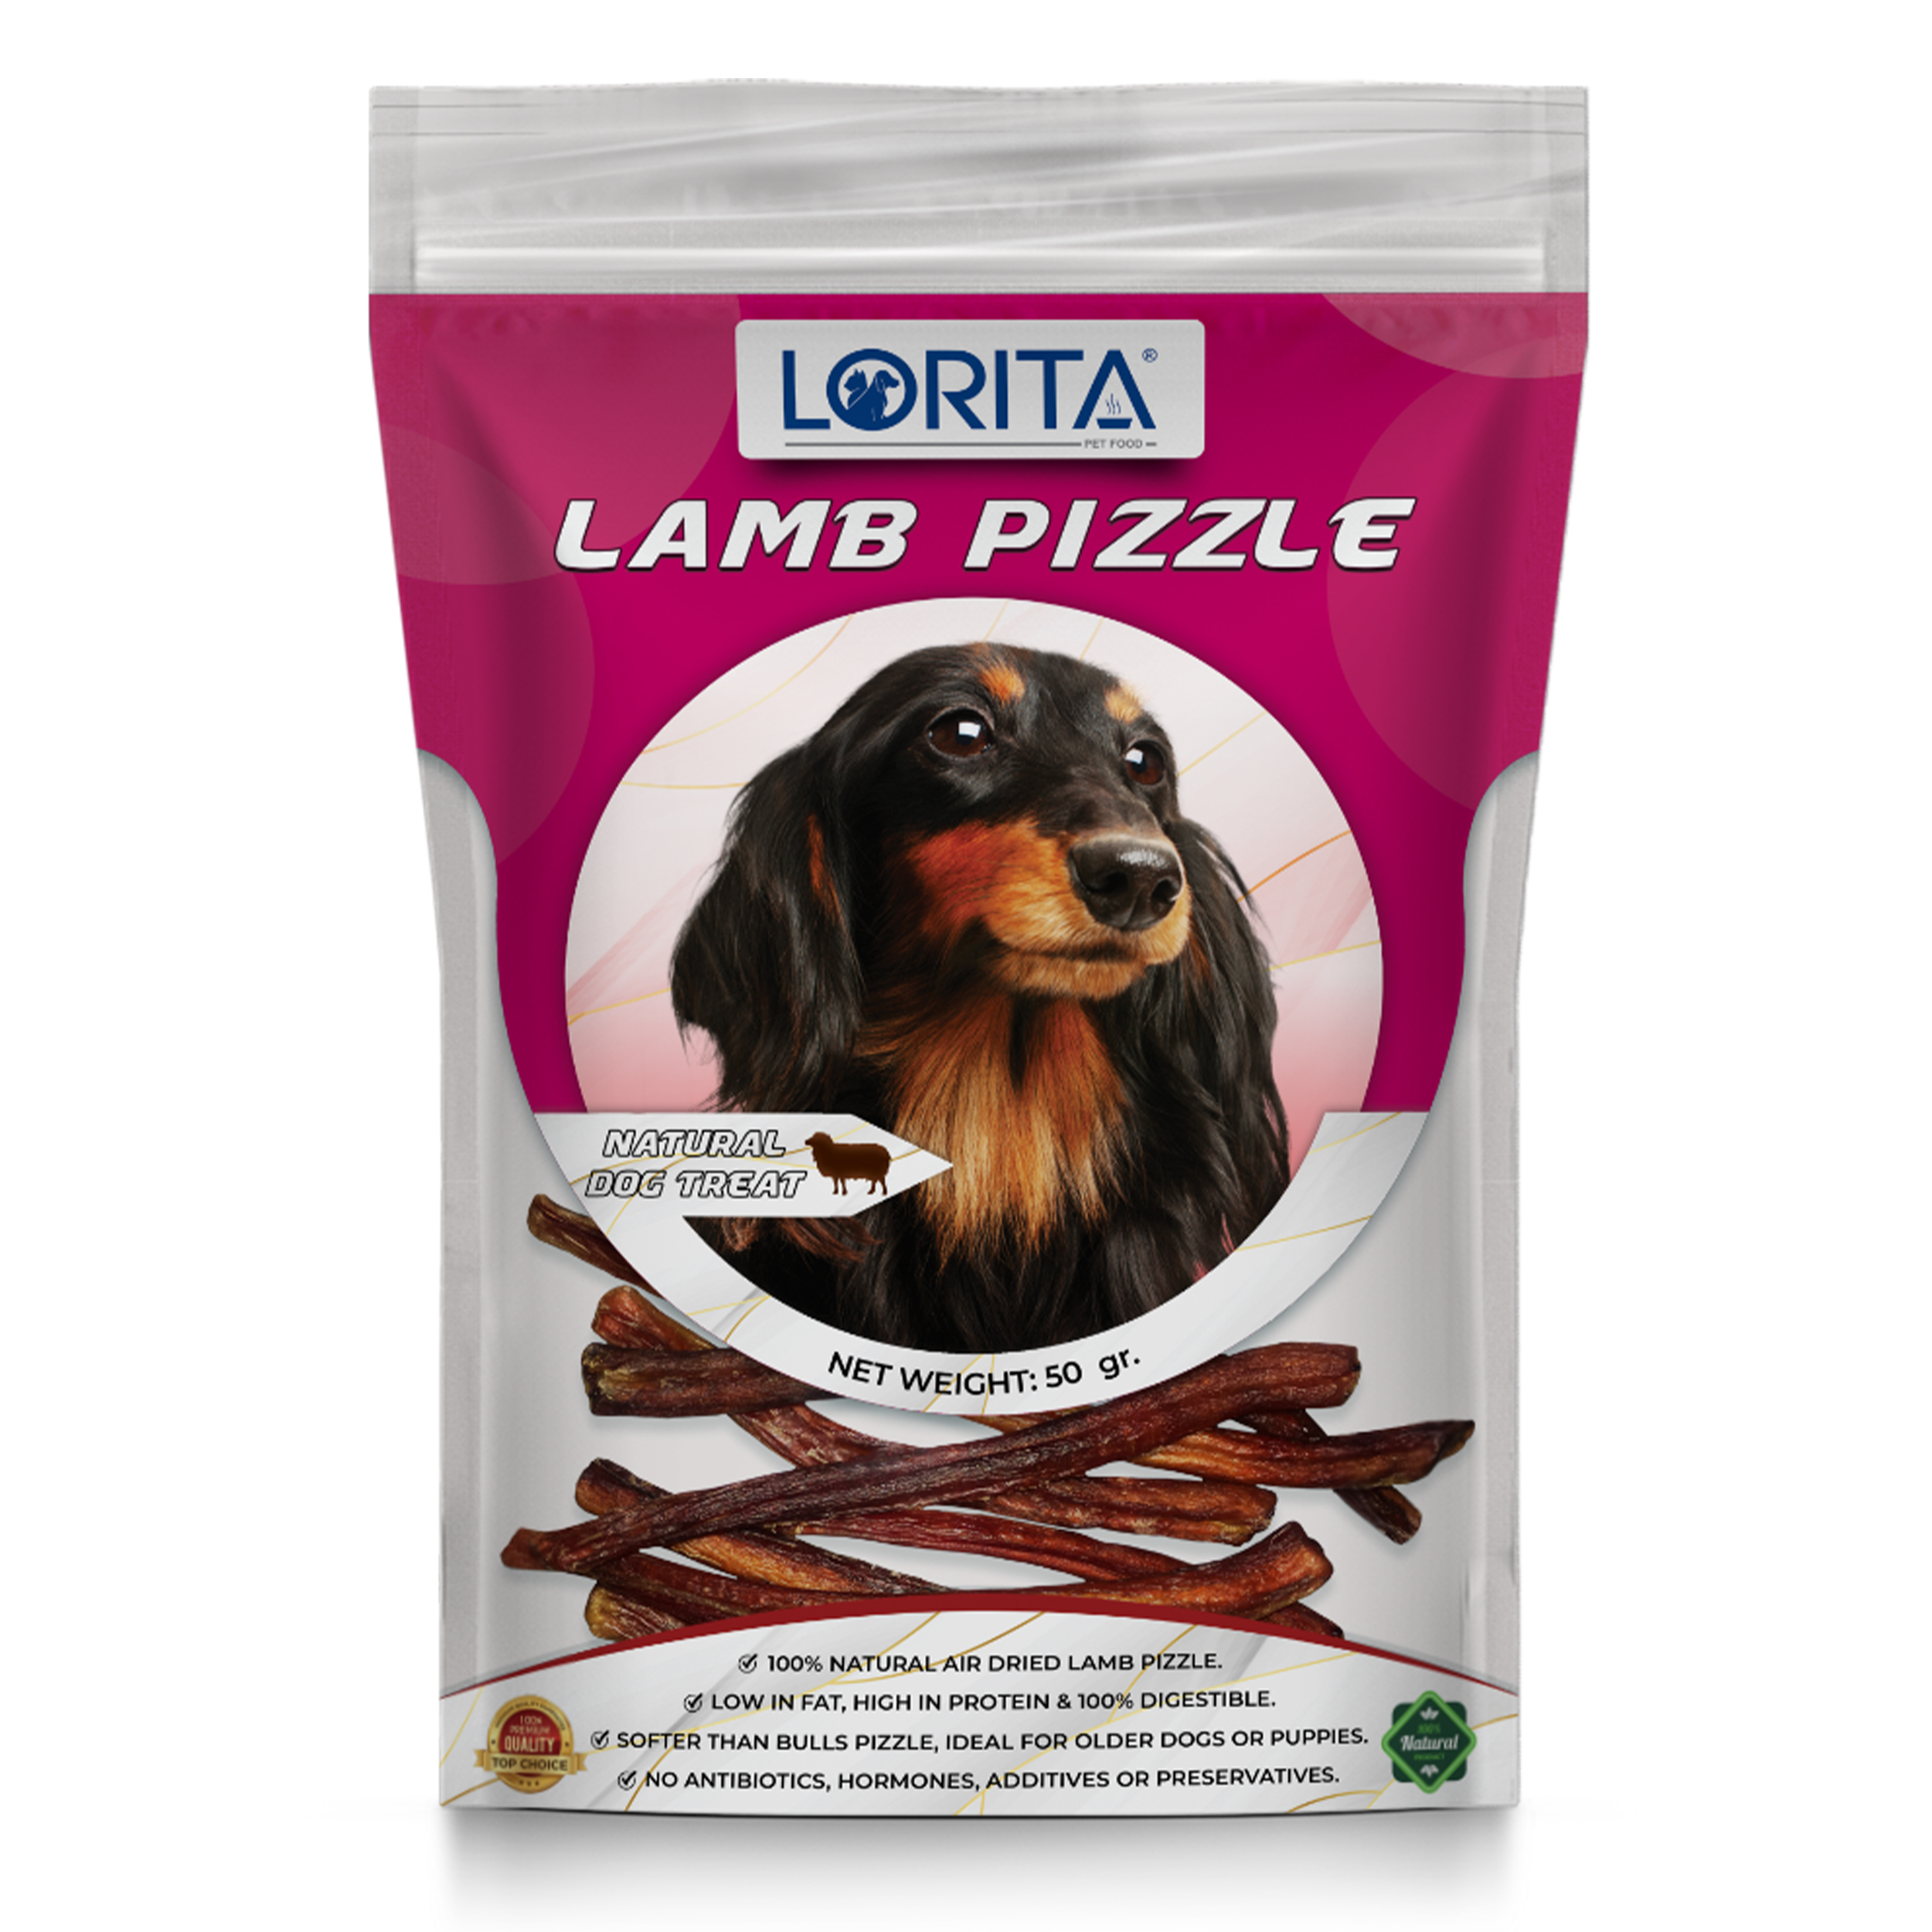  تشویقی سگ لوریتا مدل DRIED LAMB PIZZLE وزن 50 گرم 